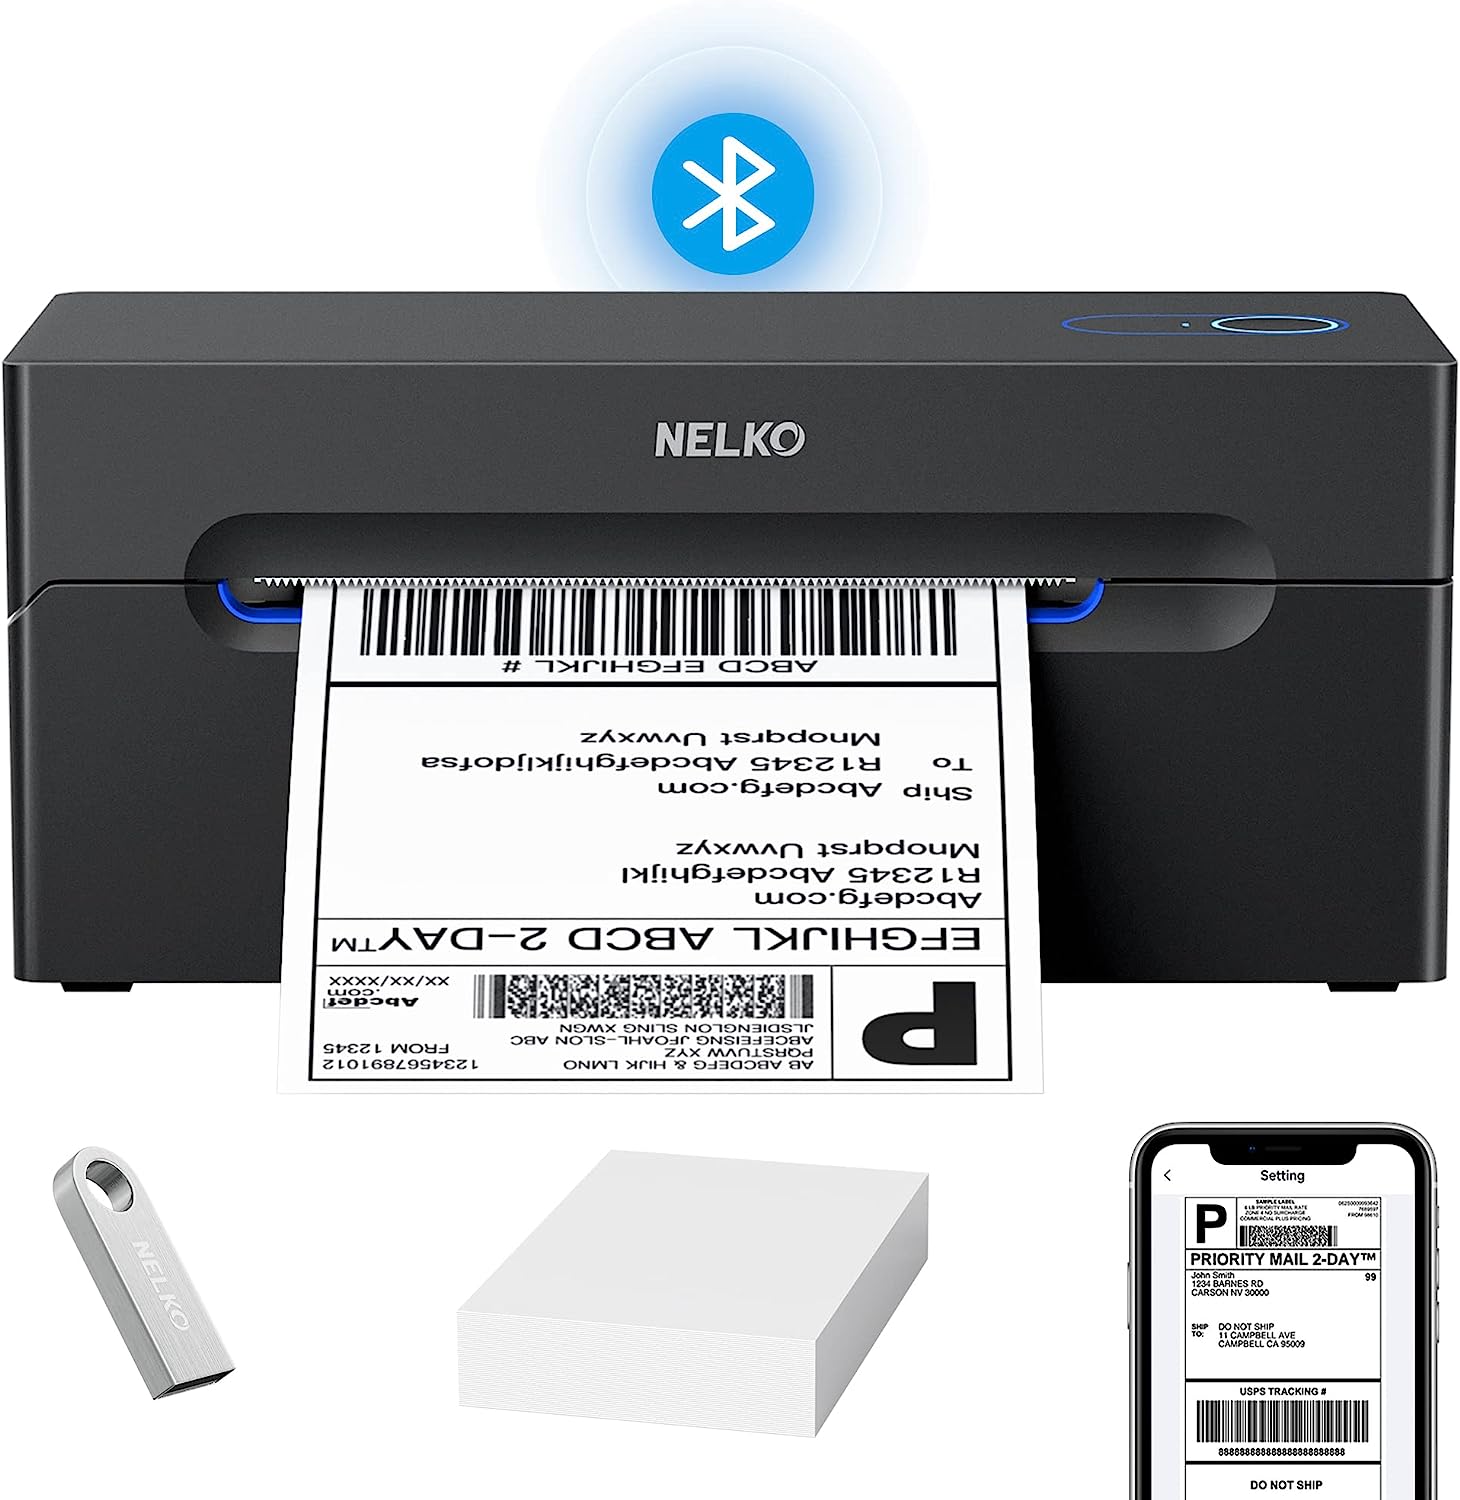 Nelko Bluetooth Thermal Shipping Label Printer, [...]